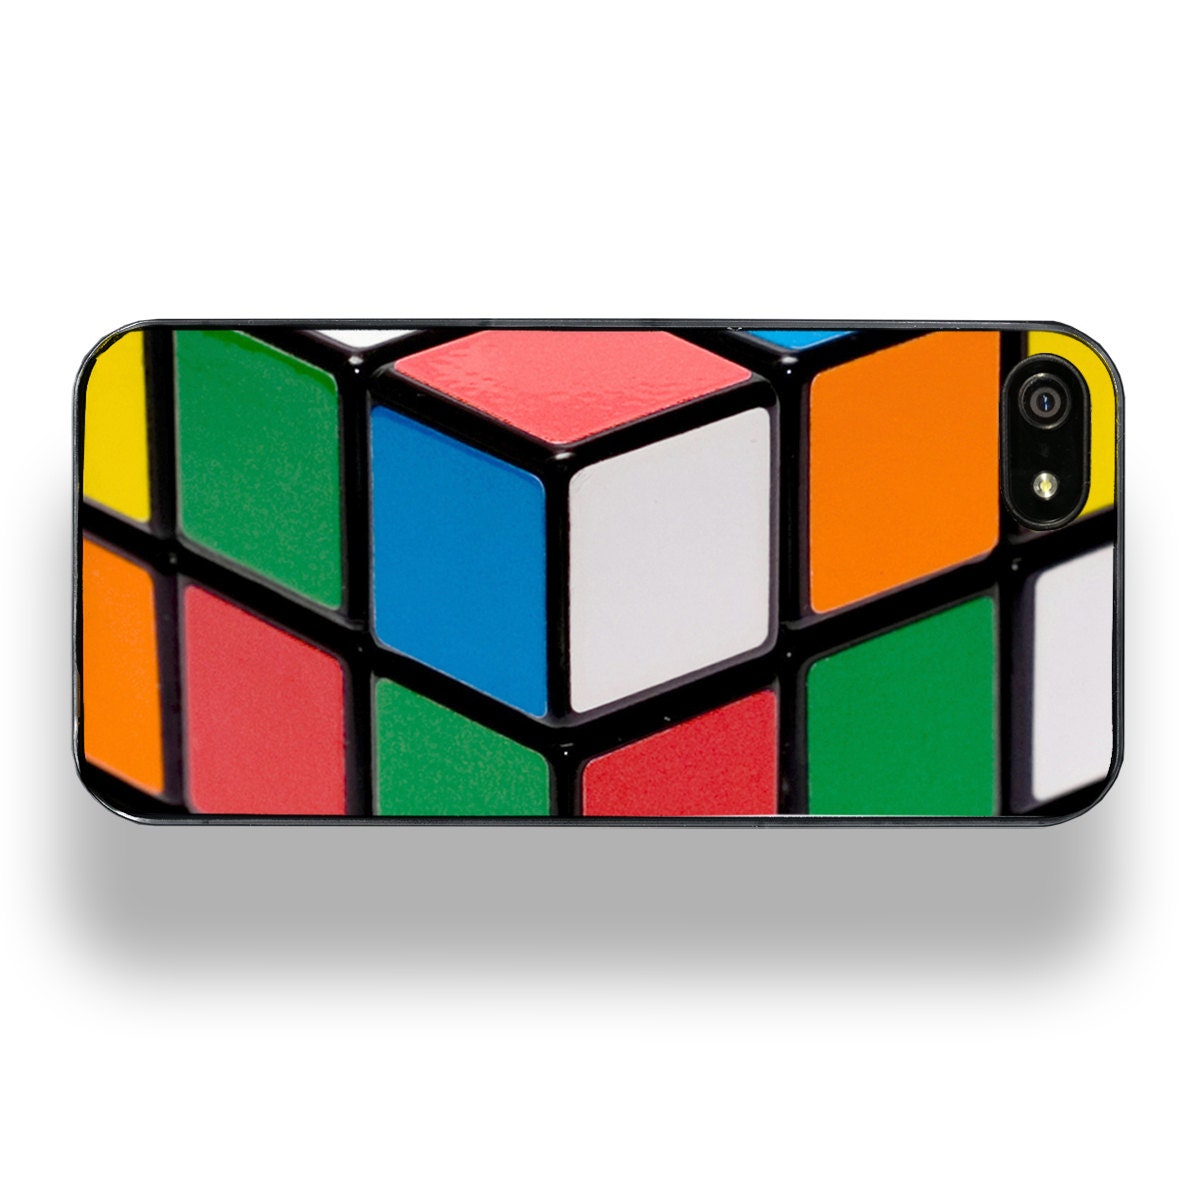 Puzzled - iPhone 5 Case by ZERO GRAVITY - ShopZeroGravity